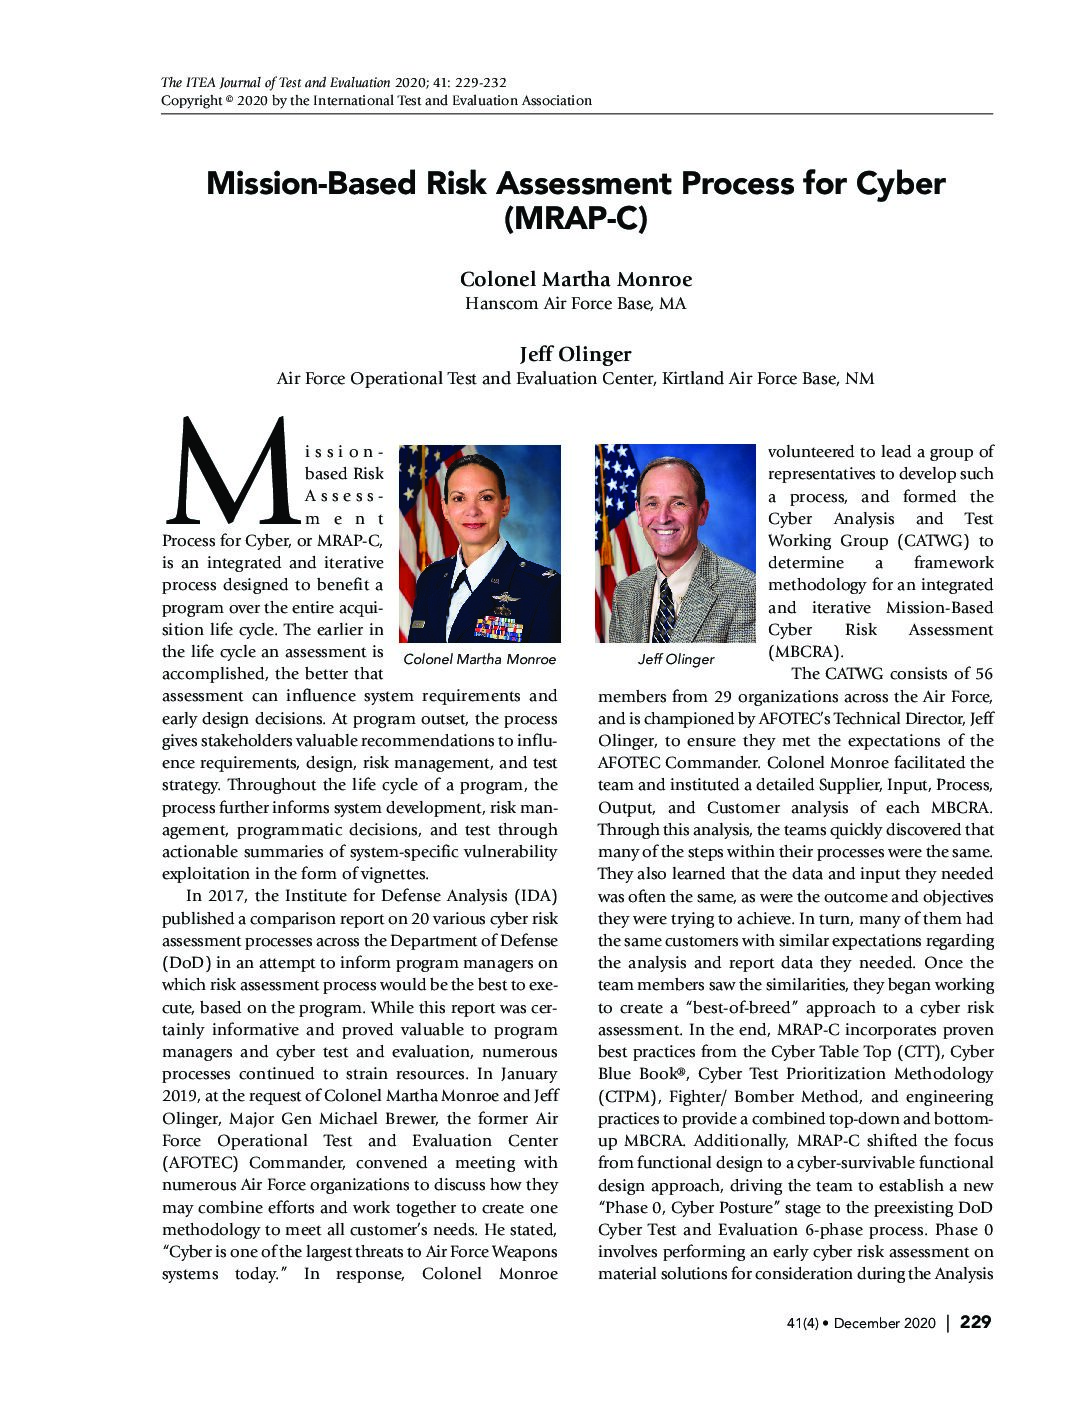 ITEA_Journal_Dec20-Mission-Based-Risk-Assessment-Process-for-Cyber-(MRAP-C)